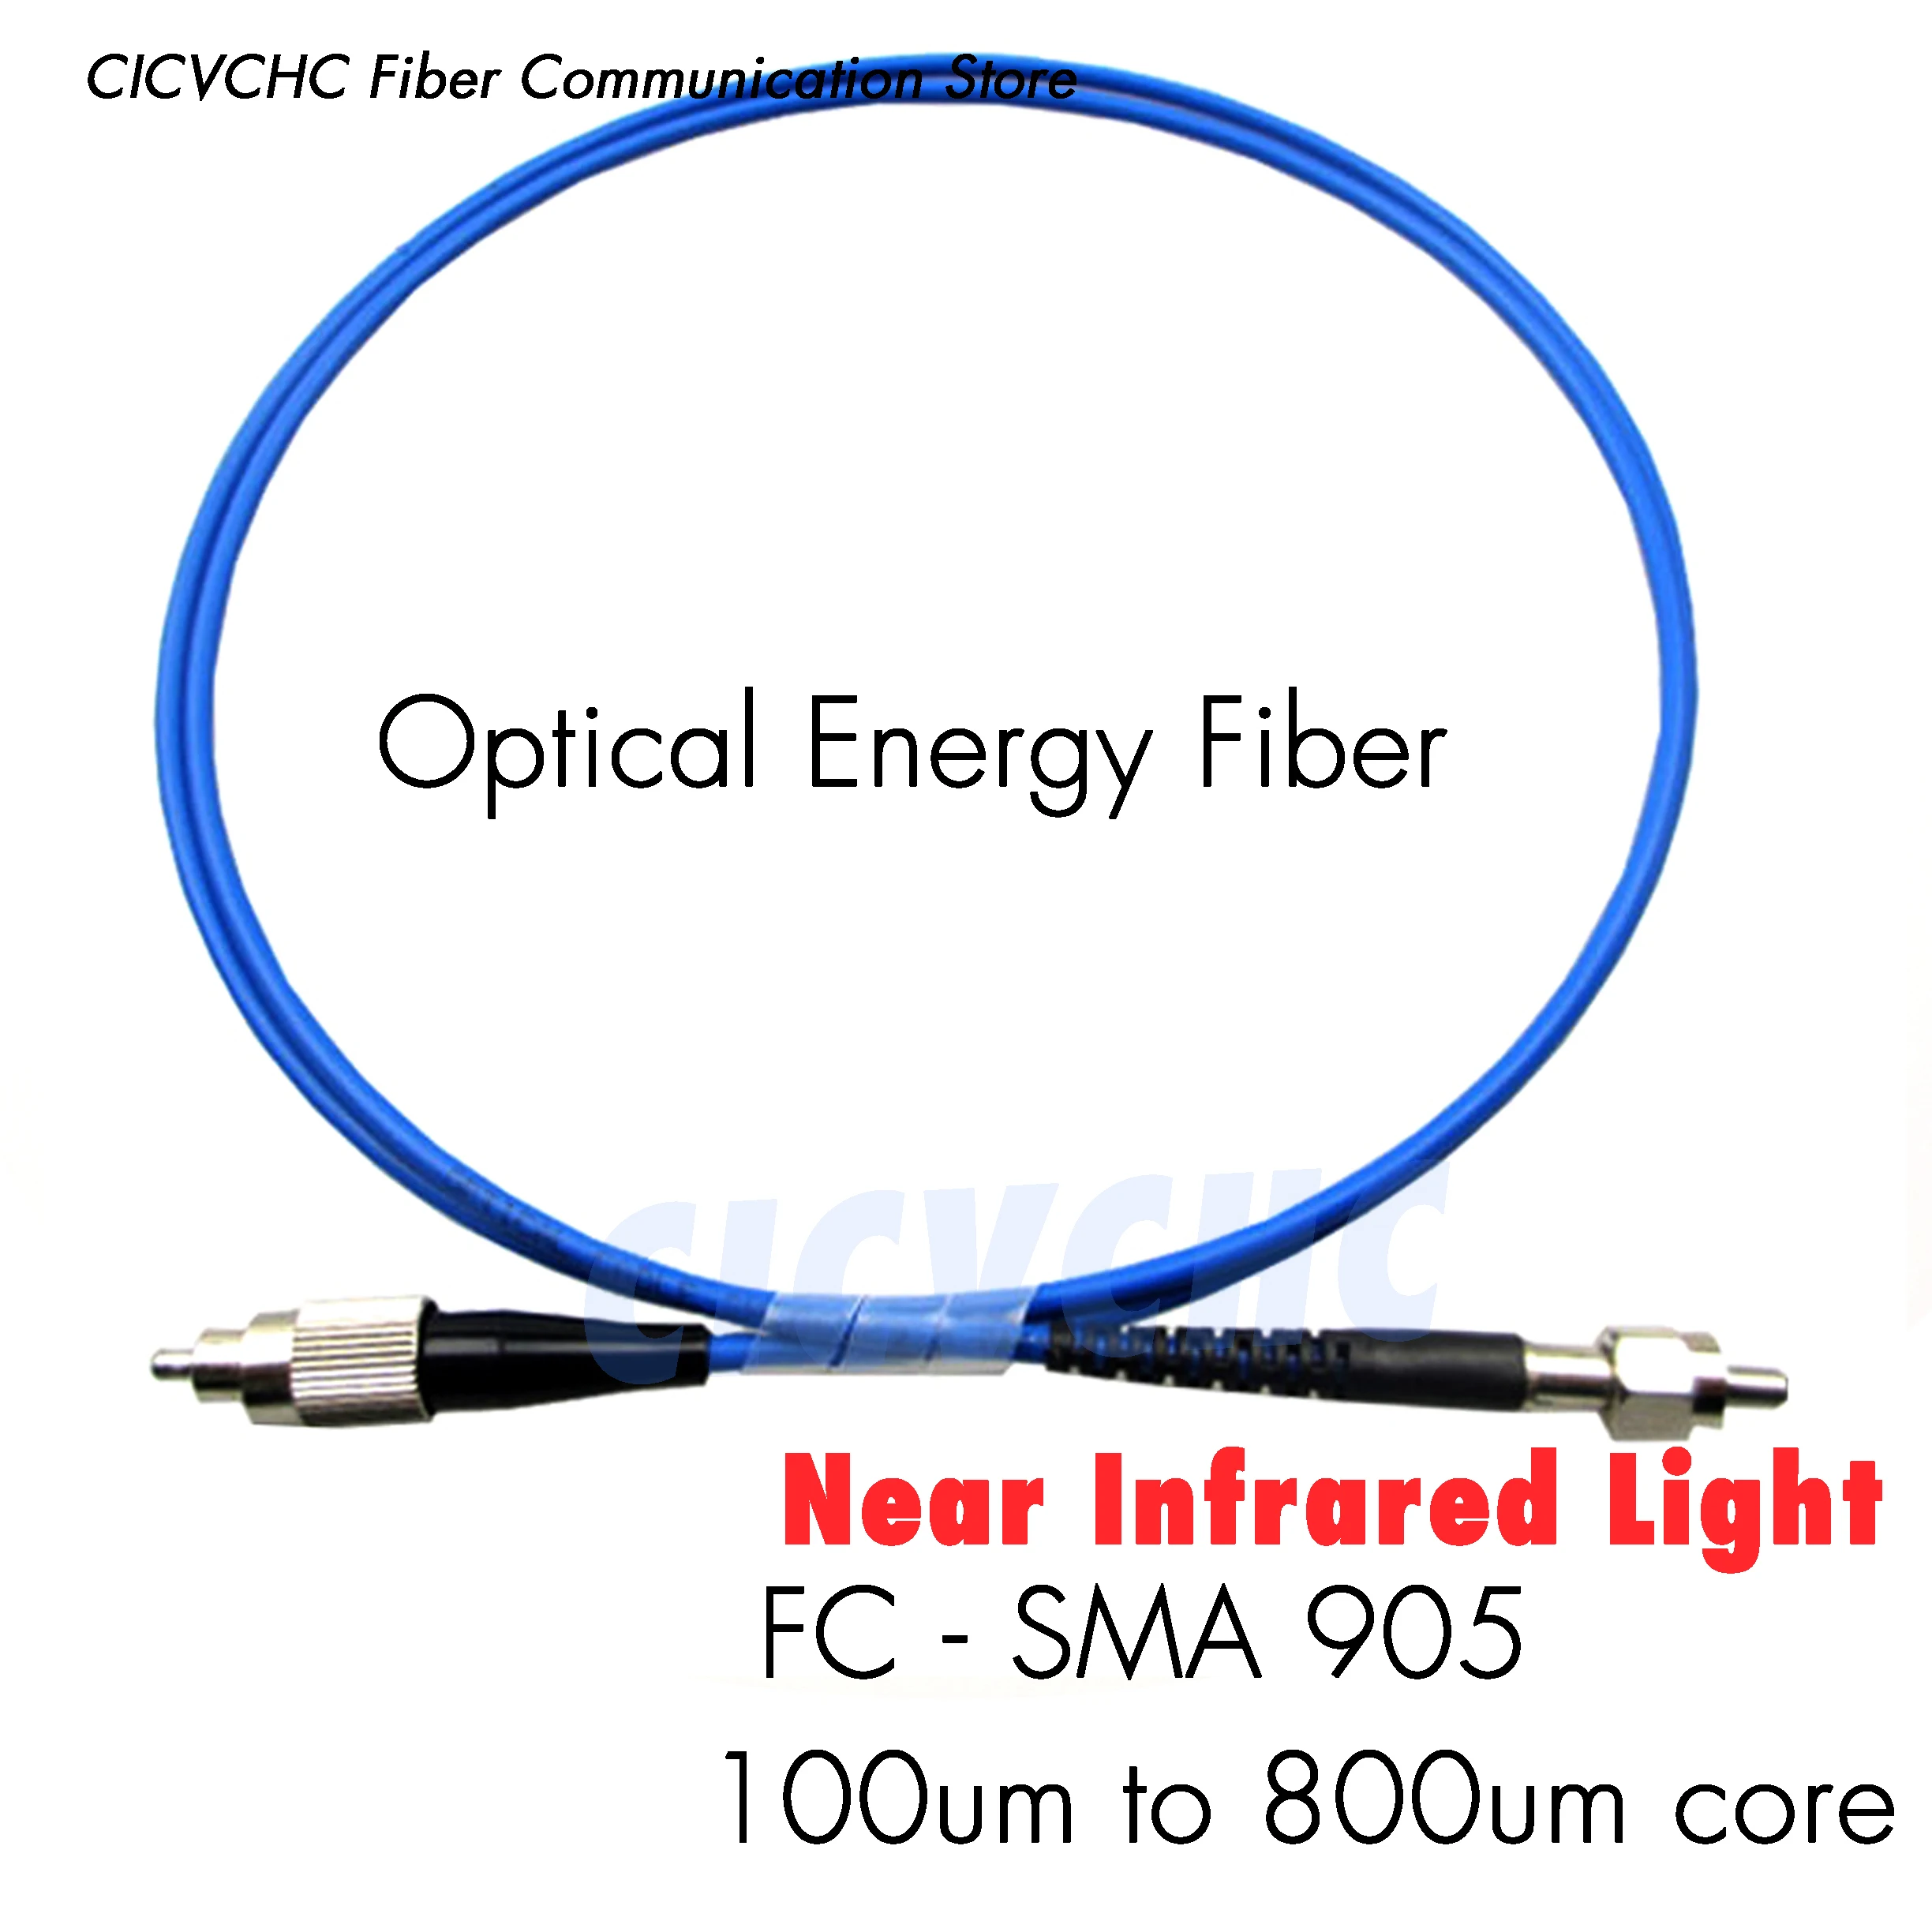 SMA905-FC/UPC energy fiber optic patch cord jumper with 100um to 800um core for Near Infrared Light